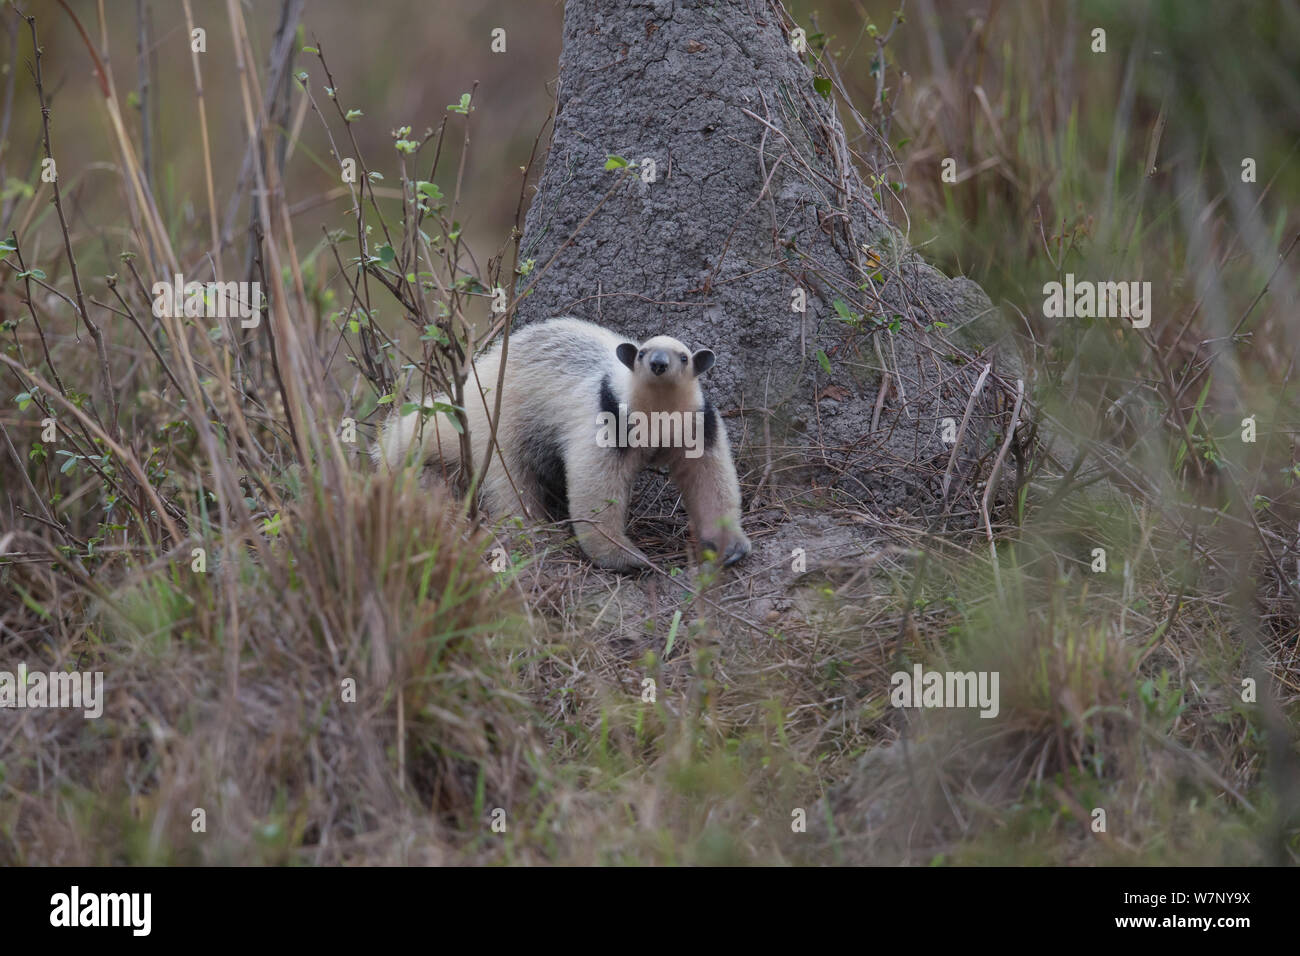 El oso melero (Tamandua tetradactyla) investigando termitero, Pantanal, Brasil Foto de stock